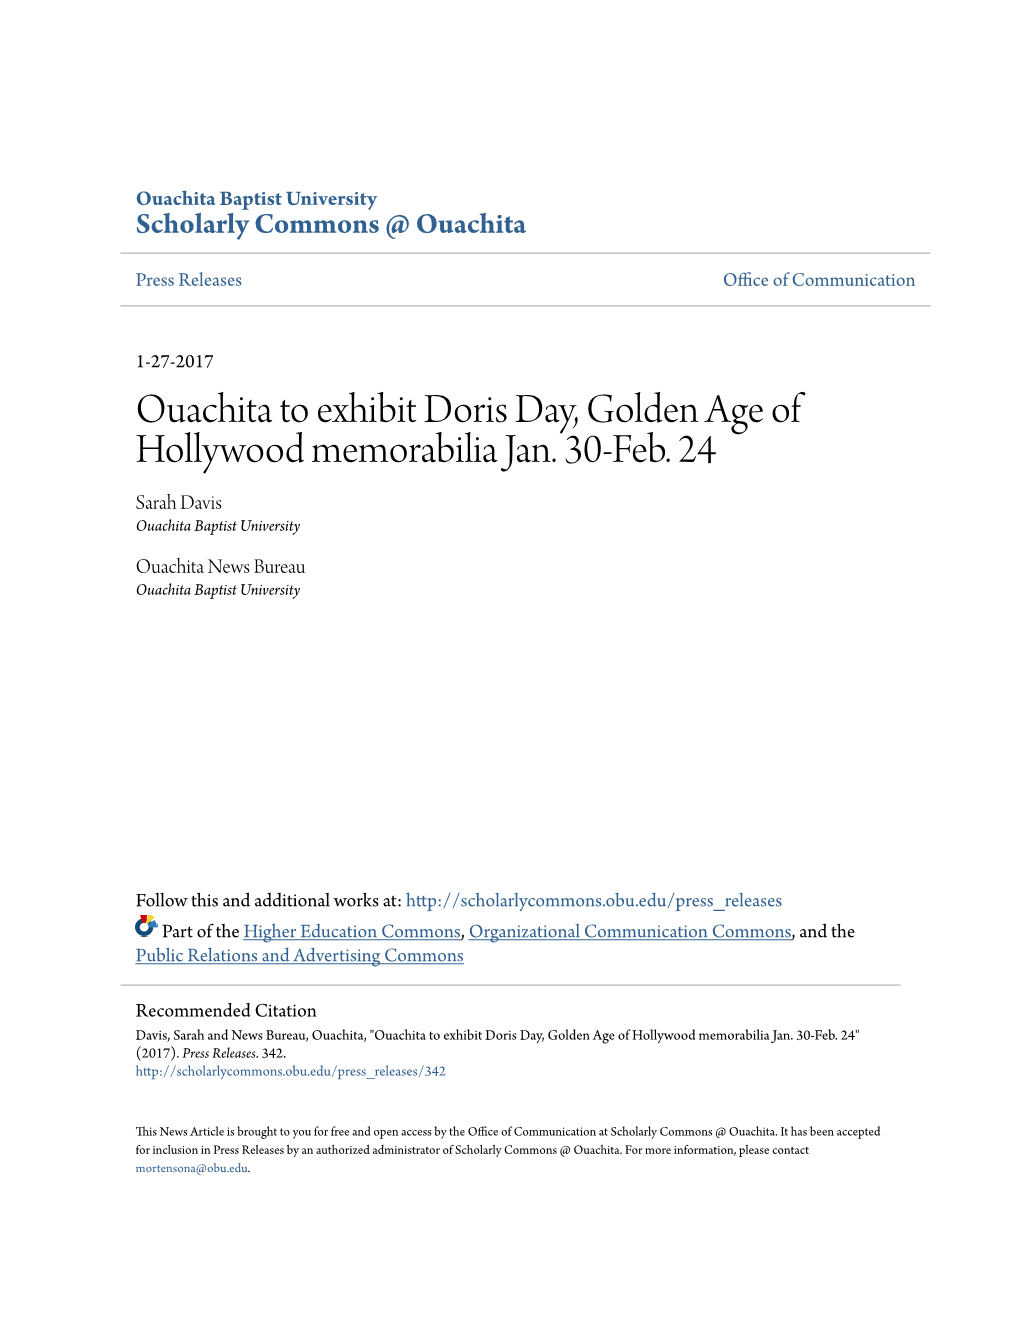 Ouachita to Exhibit Doris Day, Golden Age of Hollywood Memorabilia Jan